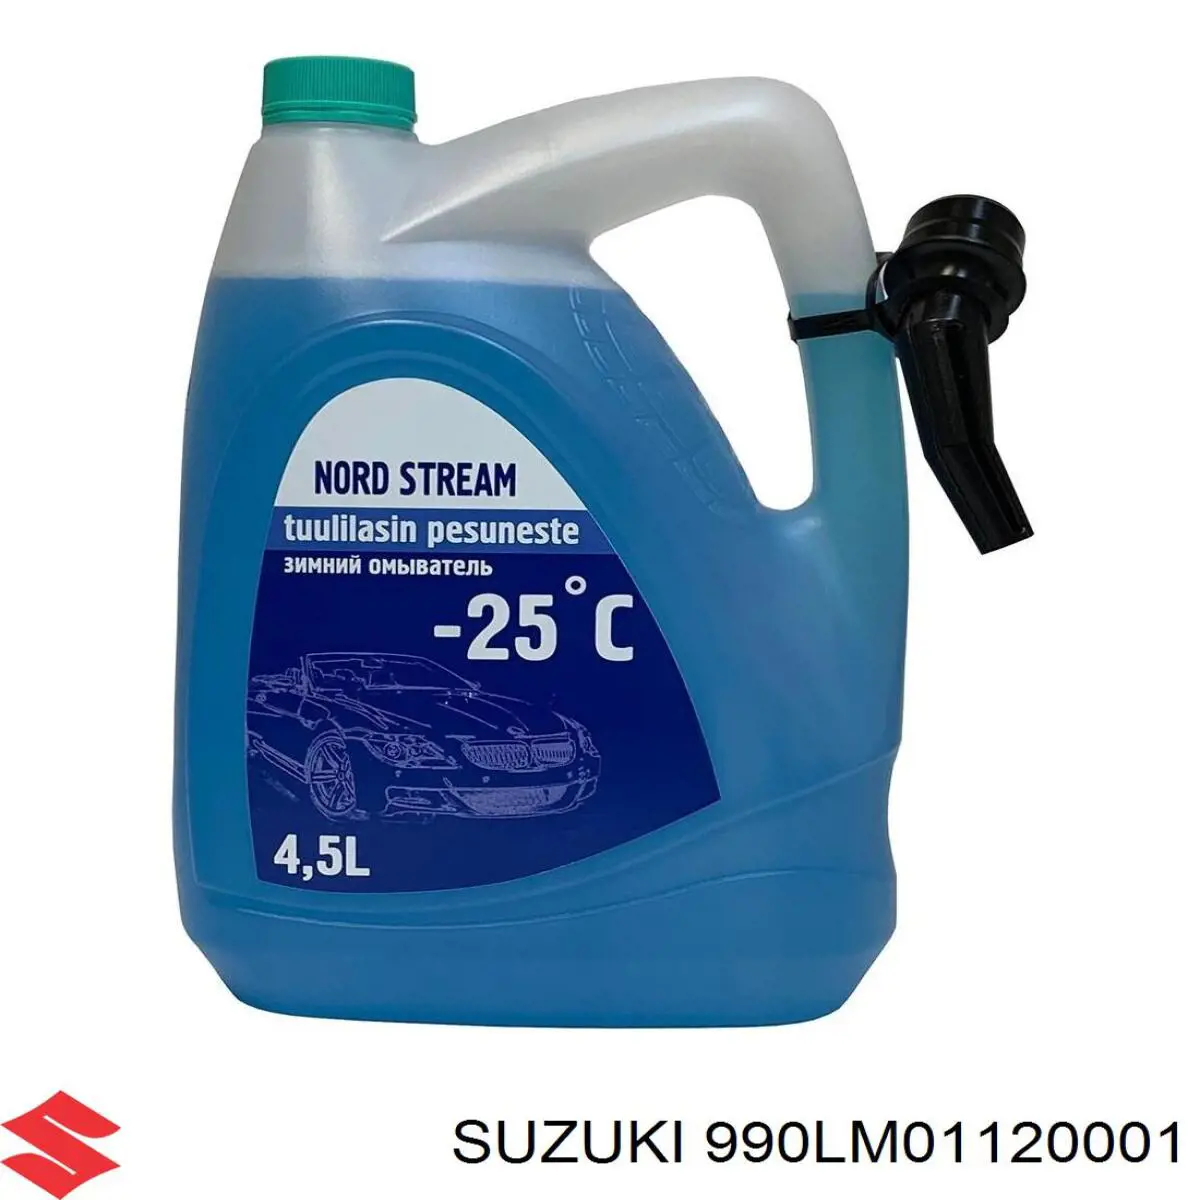 990LM01120001 Suzuki líquido limpiaparabrisas, 1l